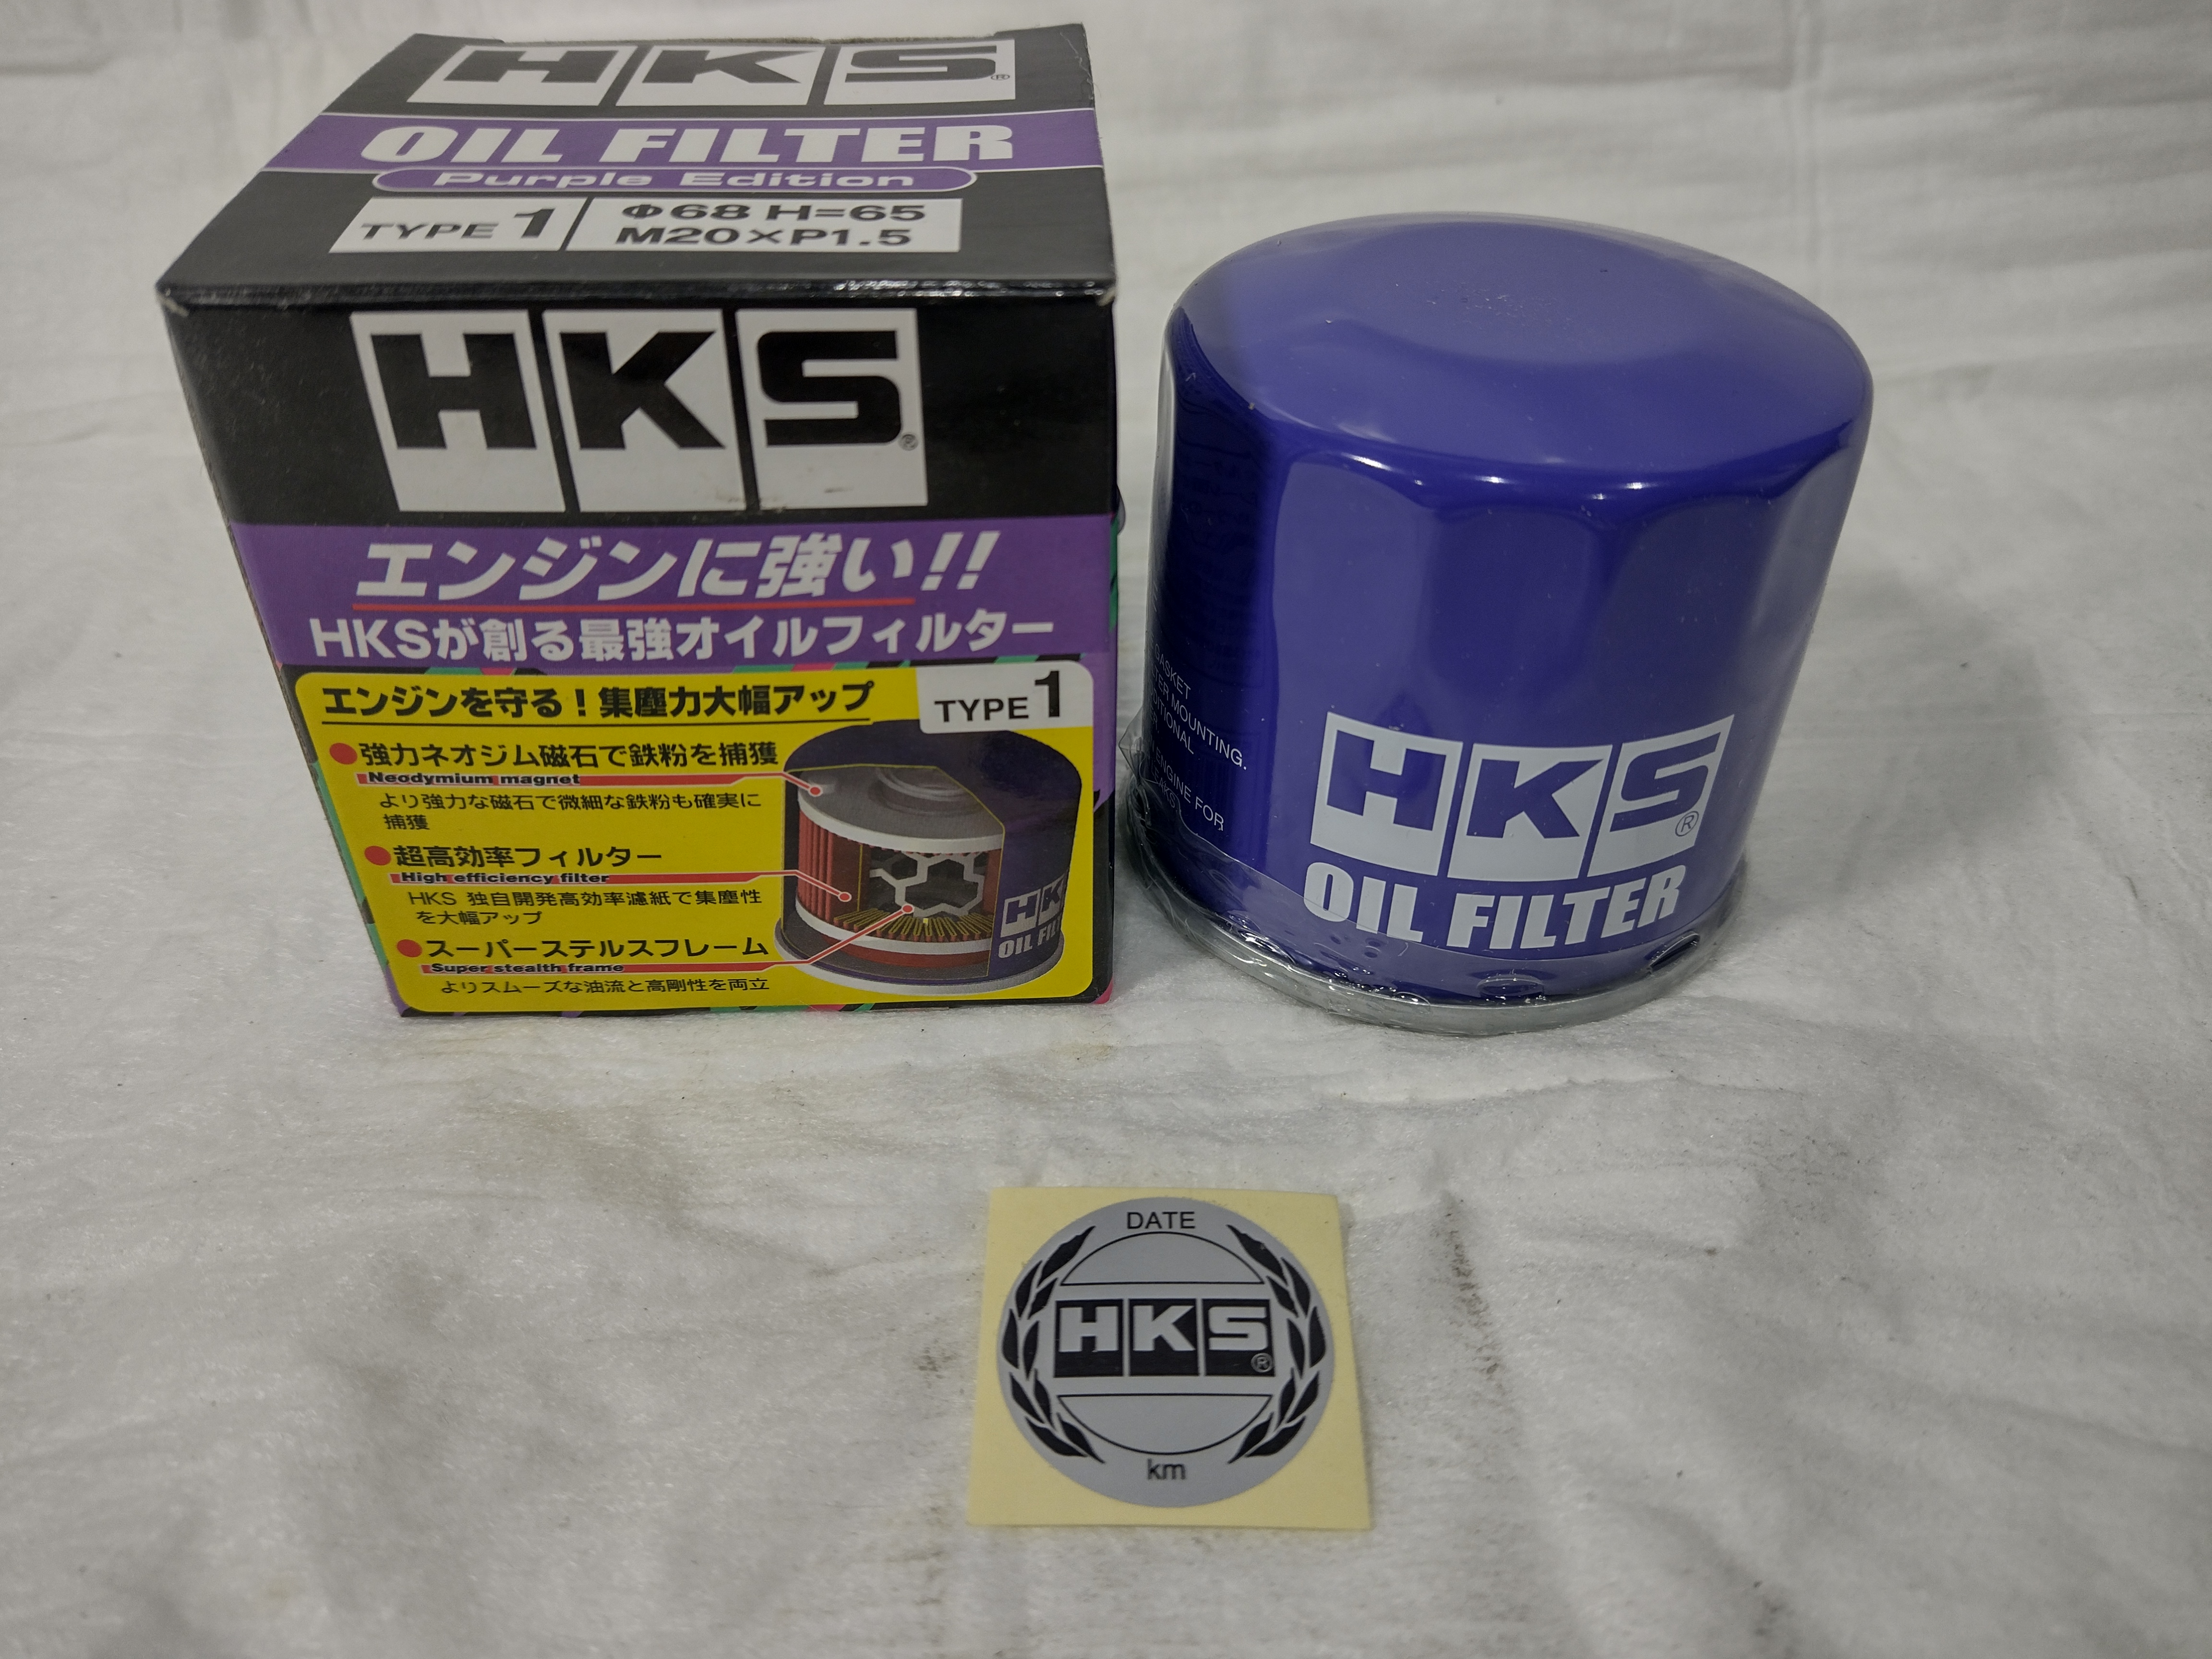 HKS Ölfilter Type 1 violett 68mm M20x1.5 für Subaru, Mitsubishi, Toyota, Nissan, 52009-AK005V